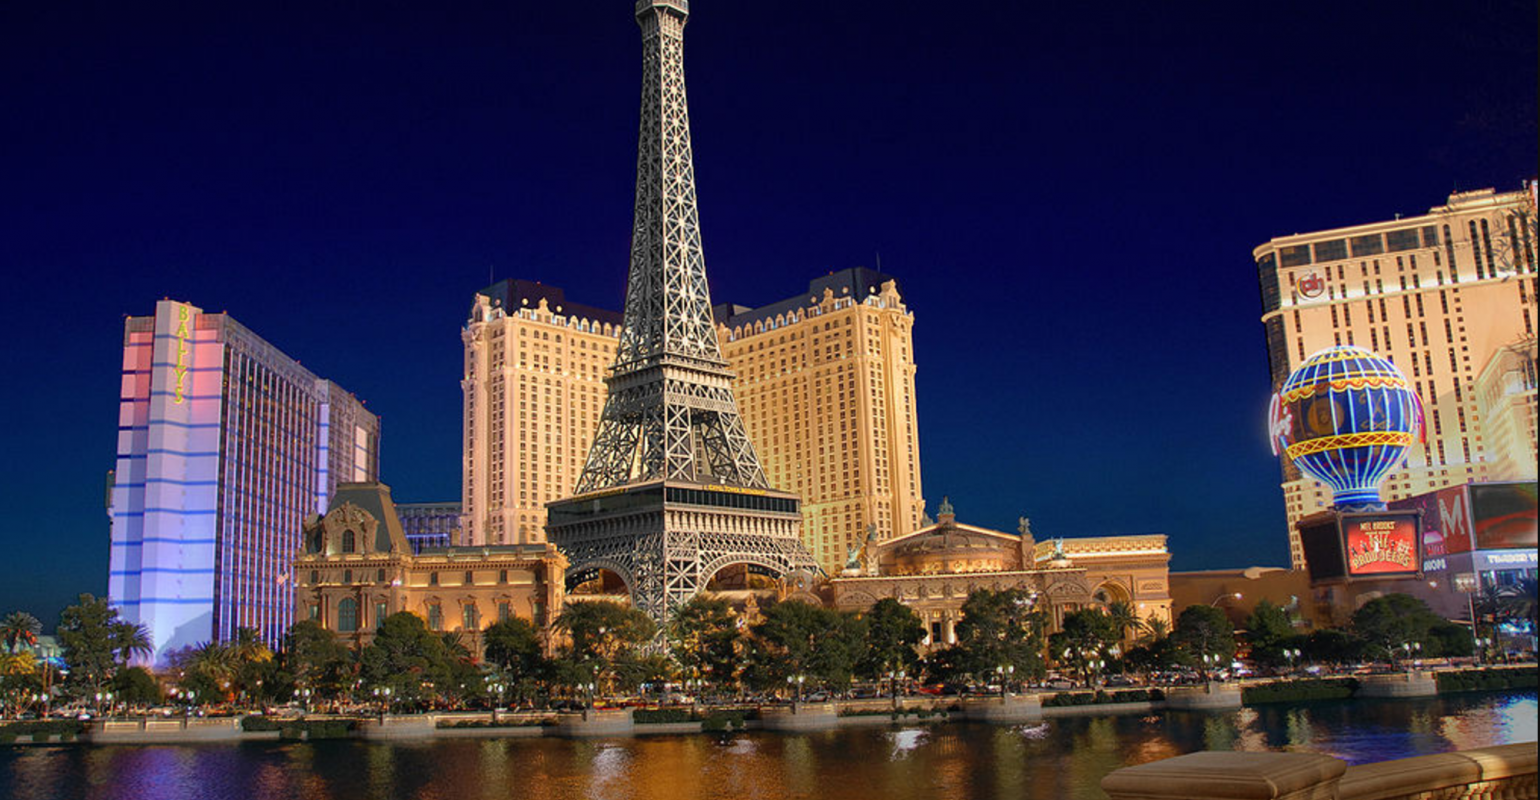 Paris Las Vegas - Las Vegas Sun News